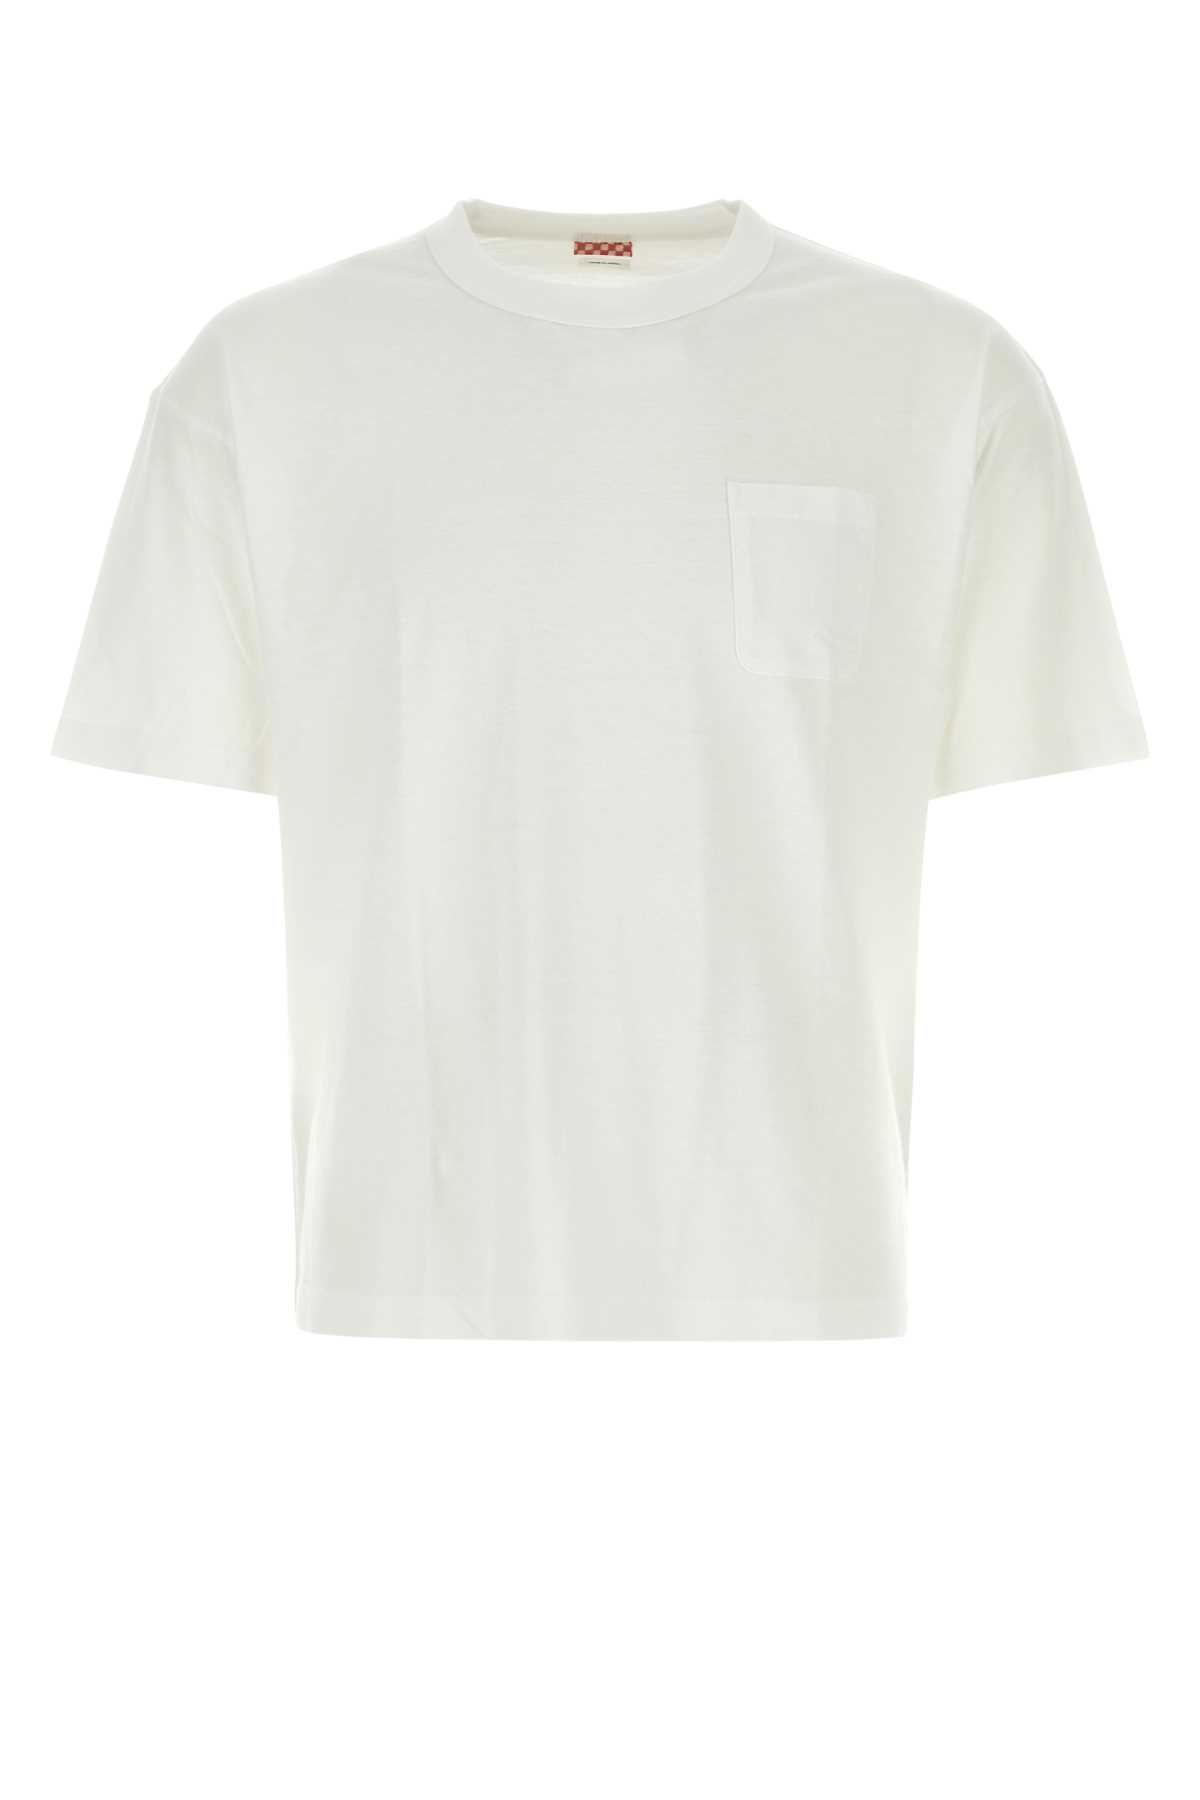 Shop Visvim White Cotton Blend T-shirt Set